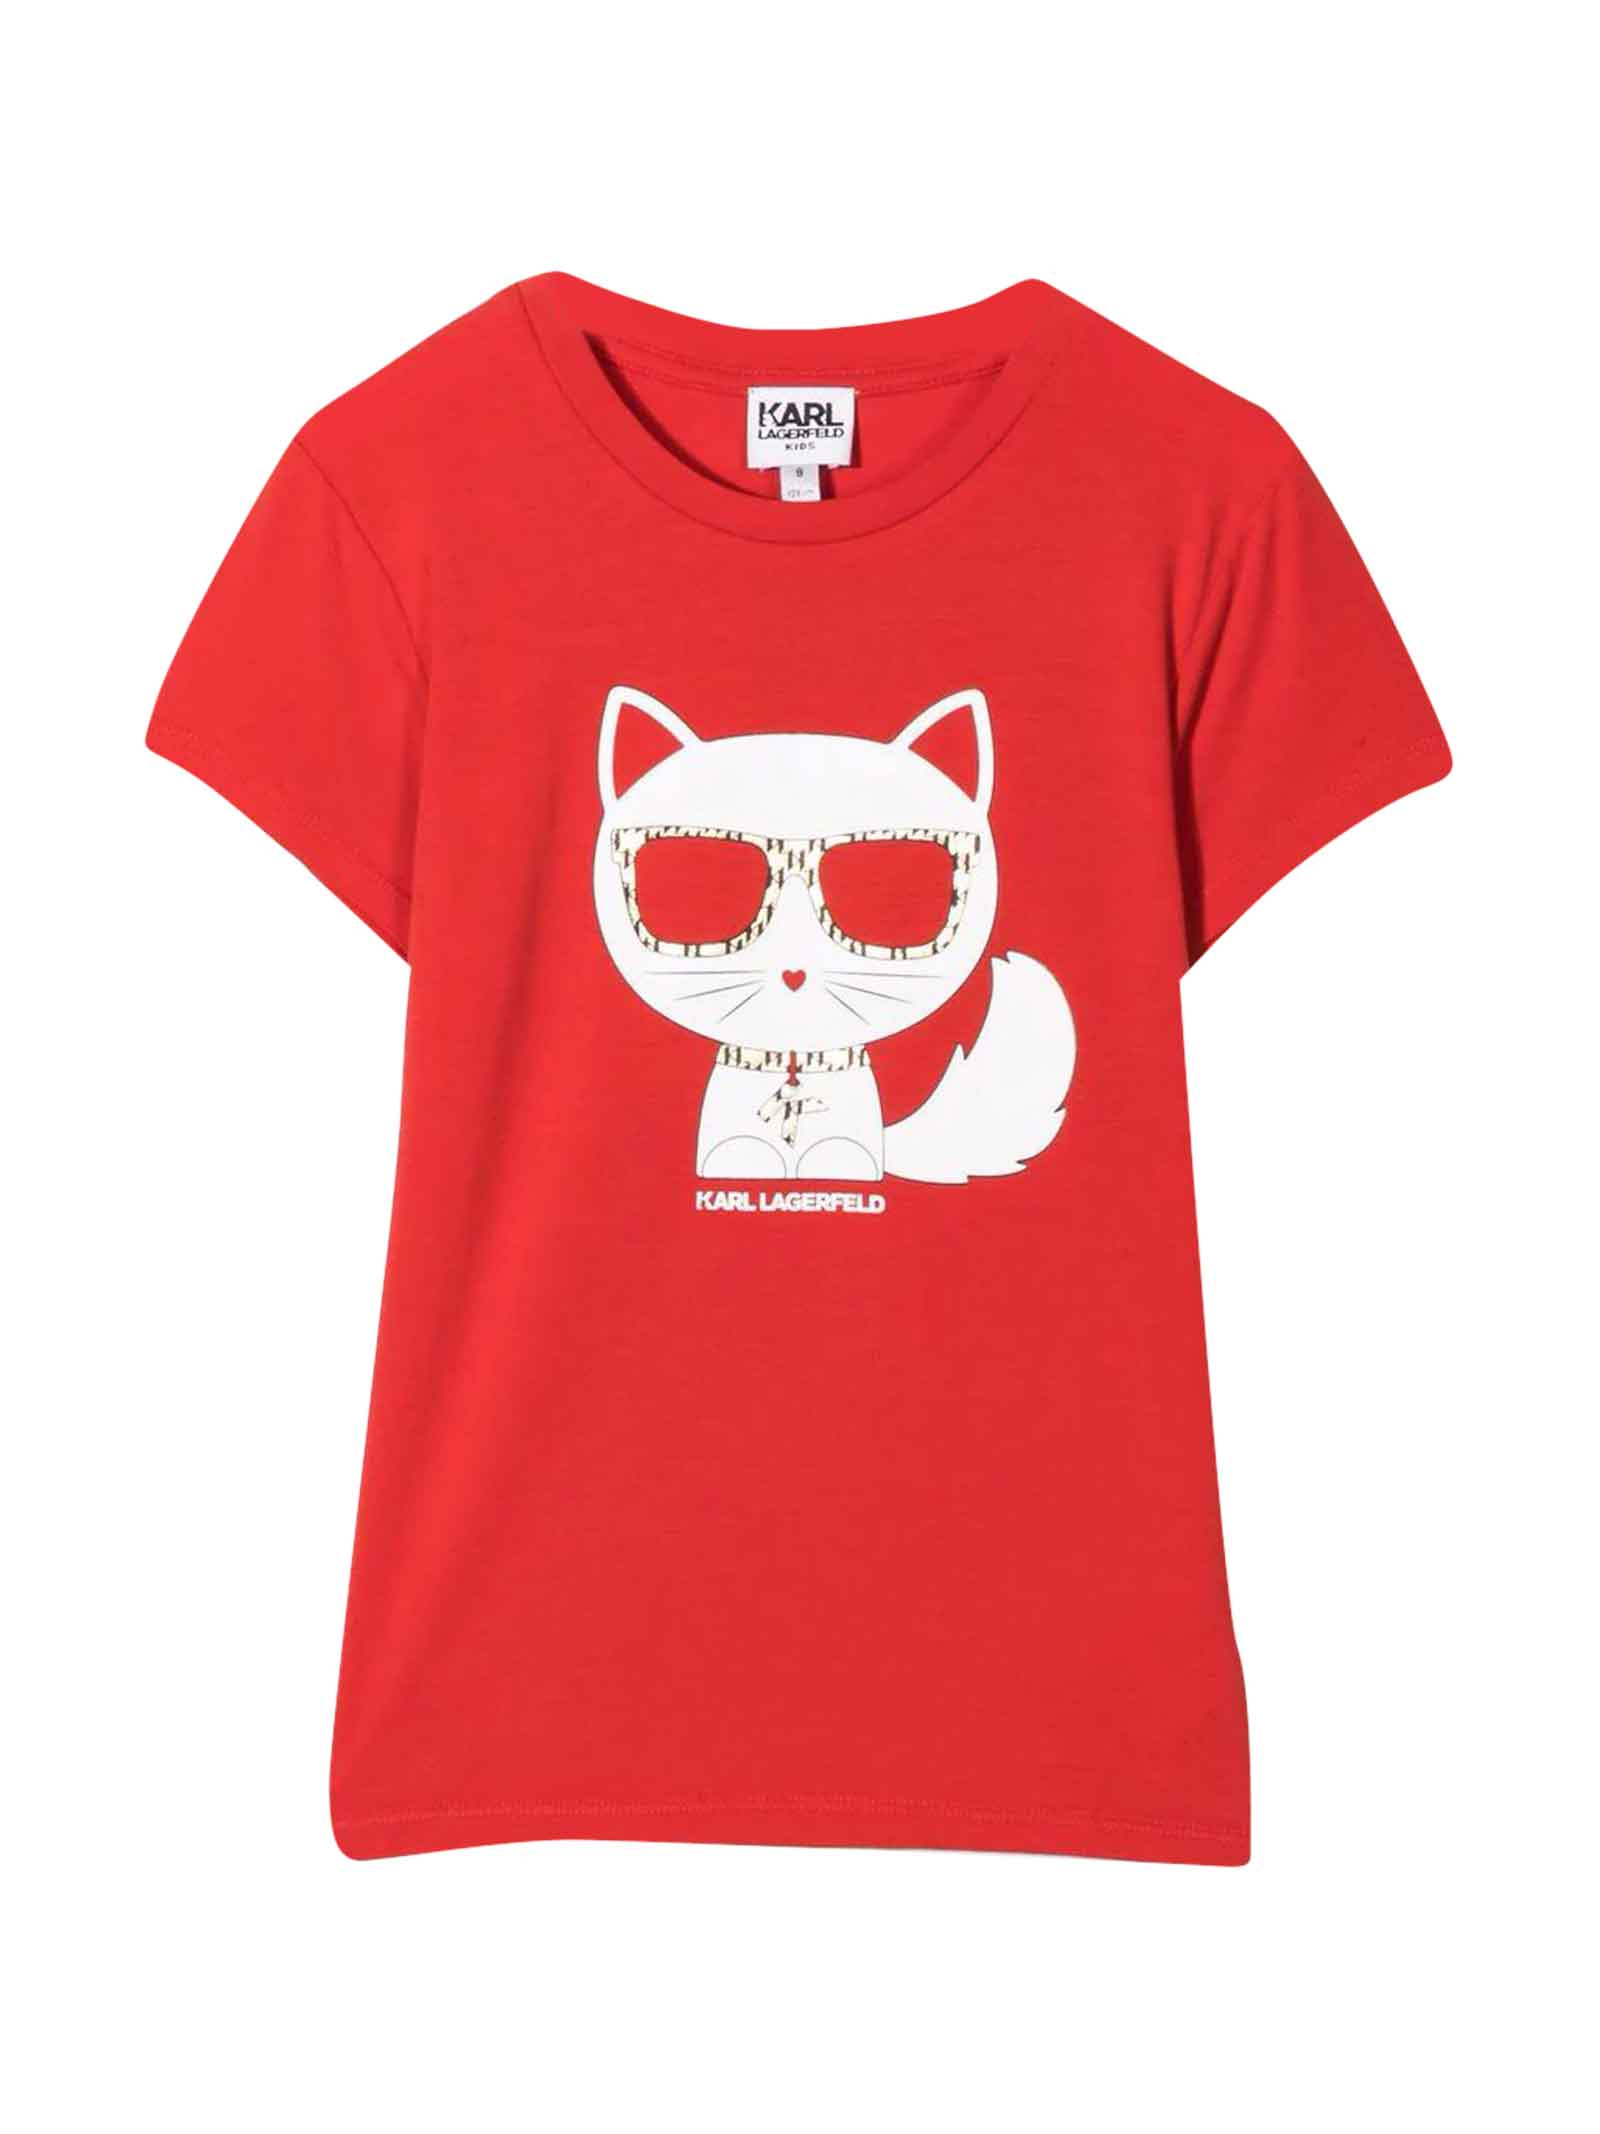 Karl Lagerfeld Kids Teen Unisex Red T-shirt